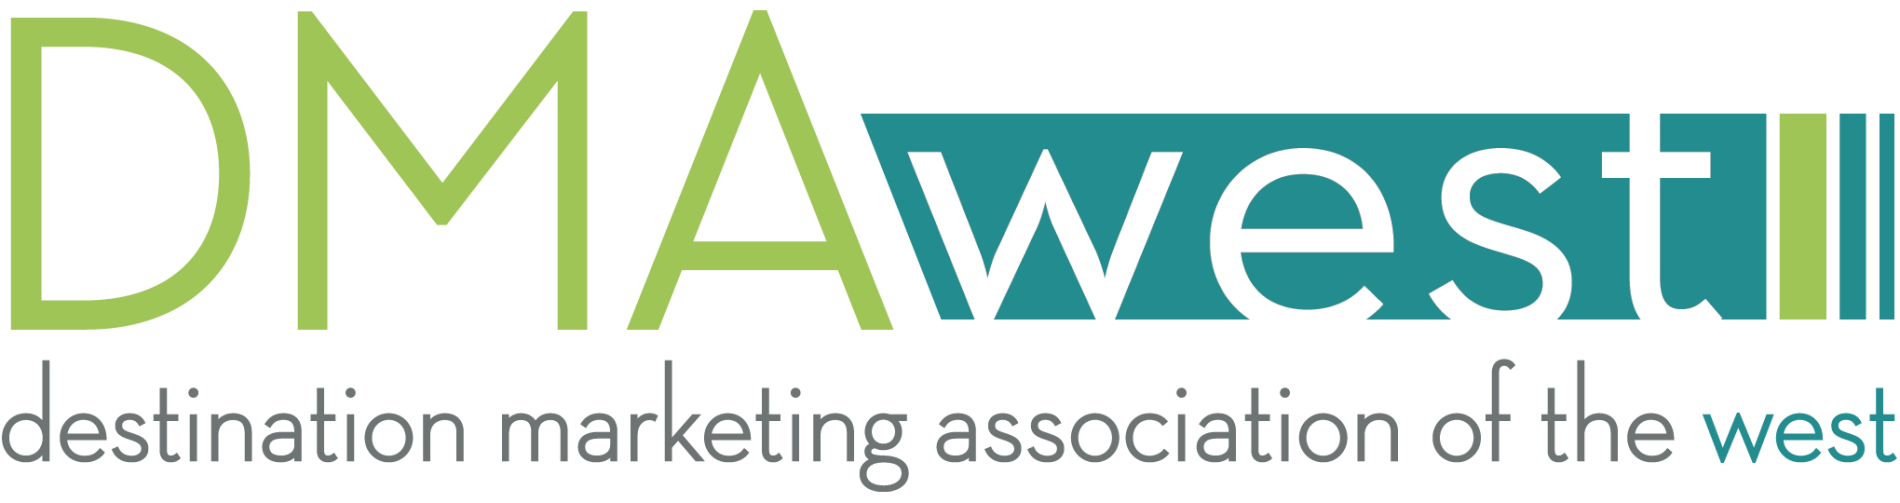 DMA west logo